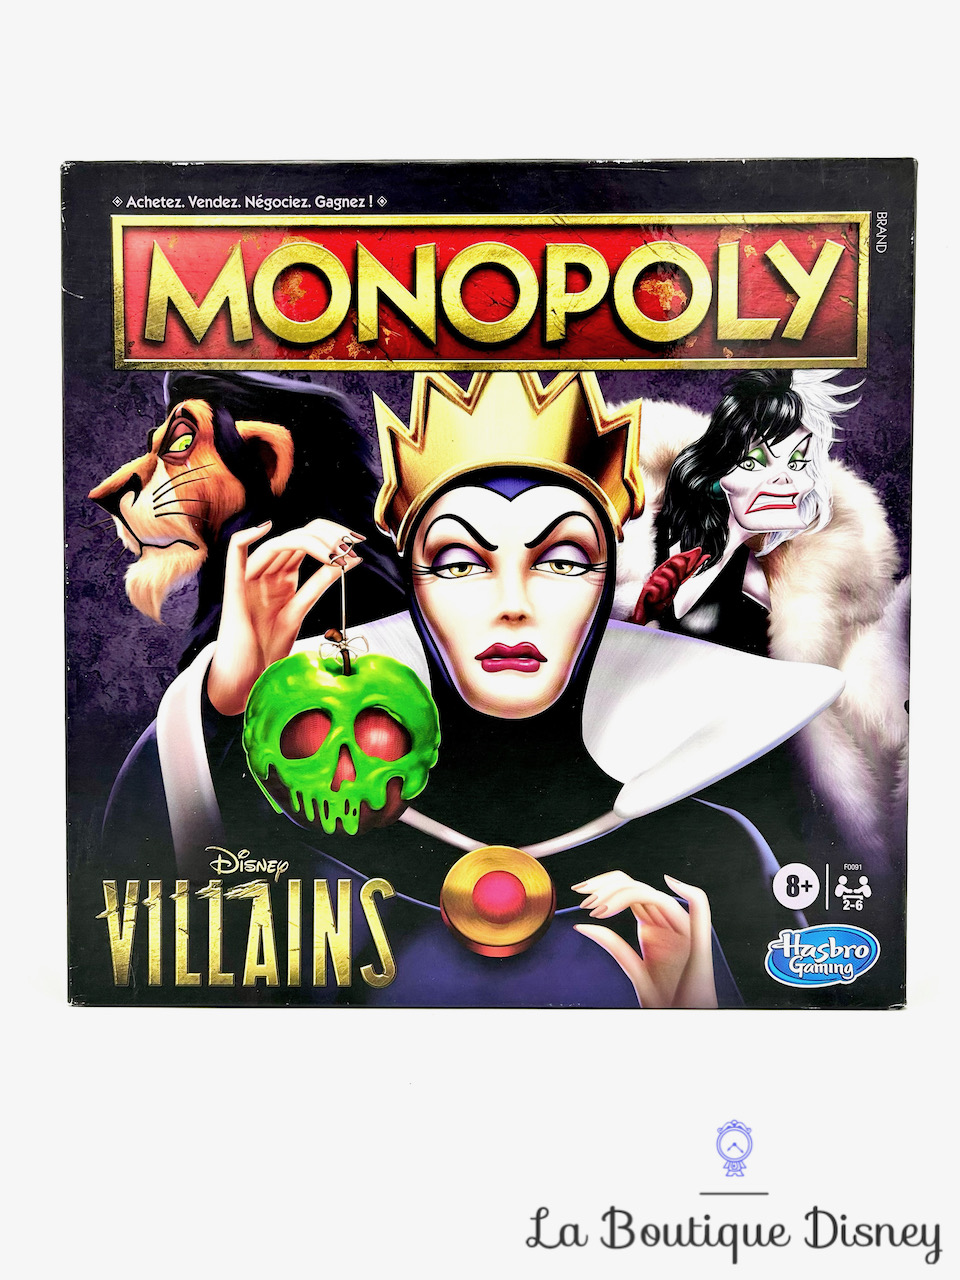 Jeu de société Monopoly Villains Disney Hasbro Gaming méchants